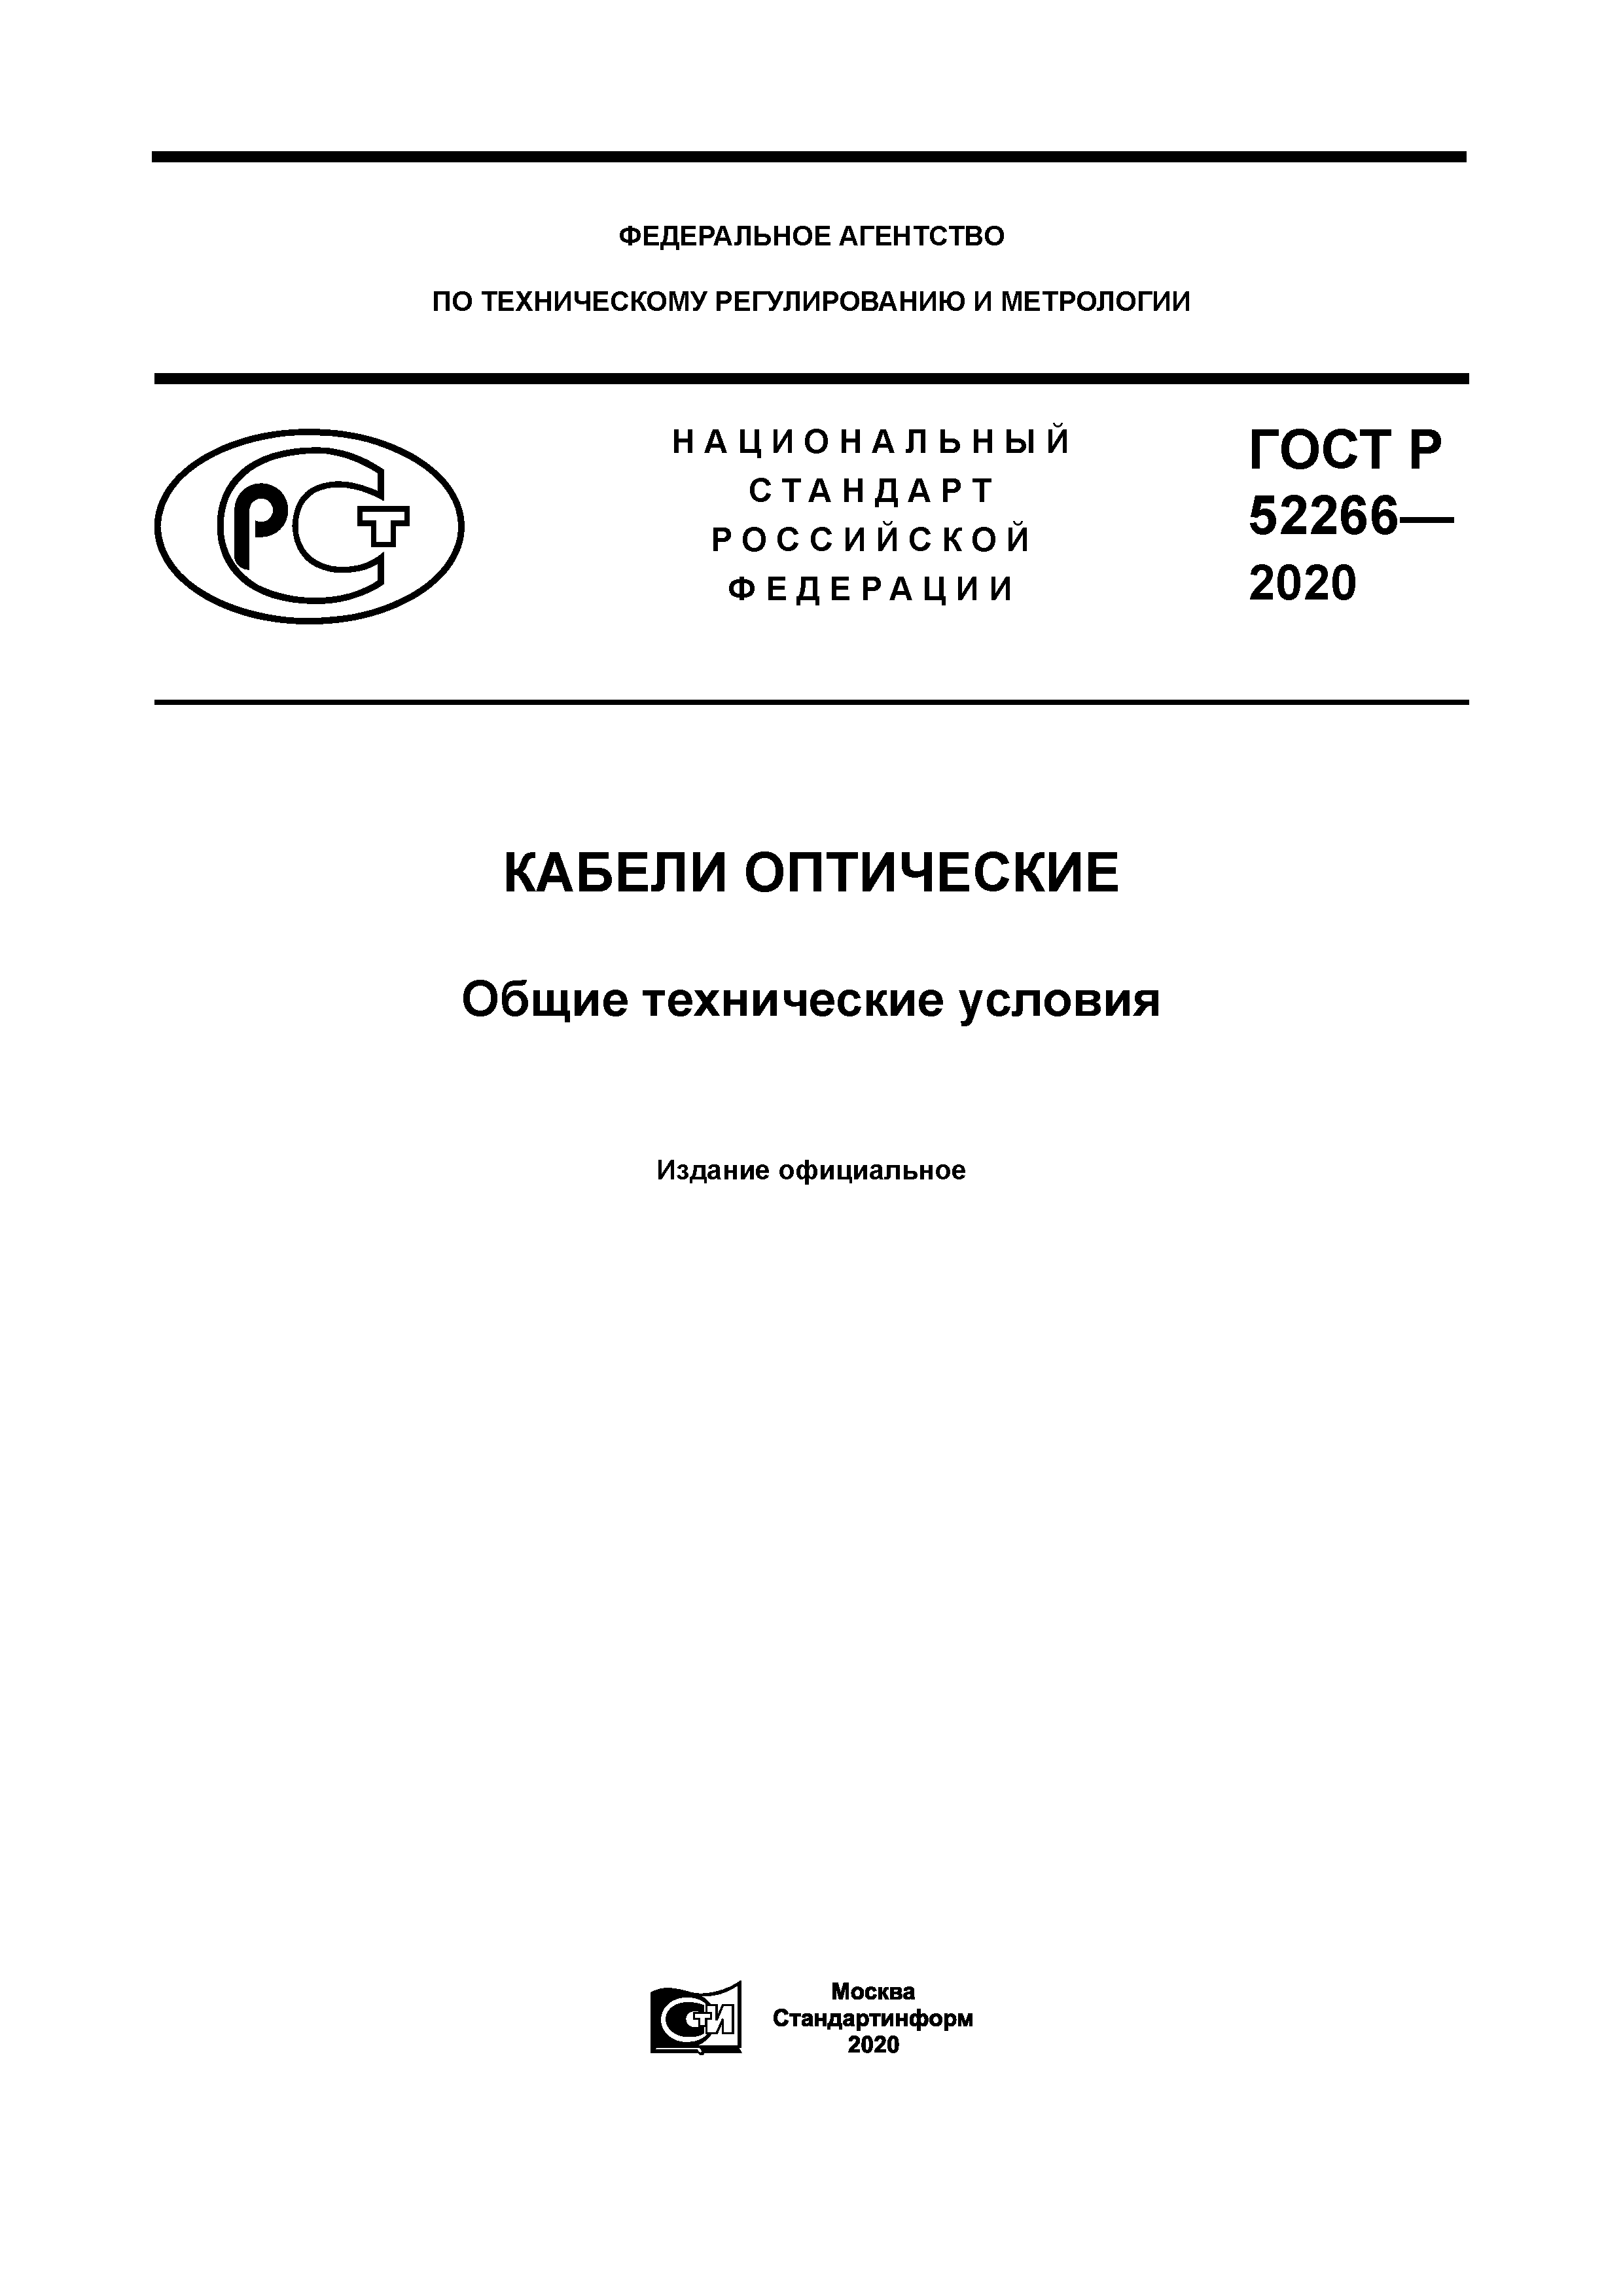 ГОСТ Р 52266-2020